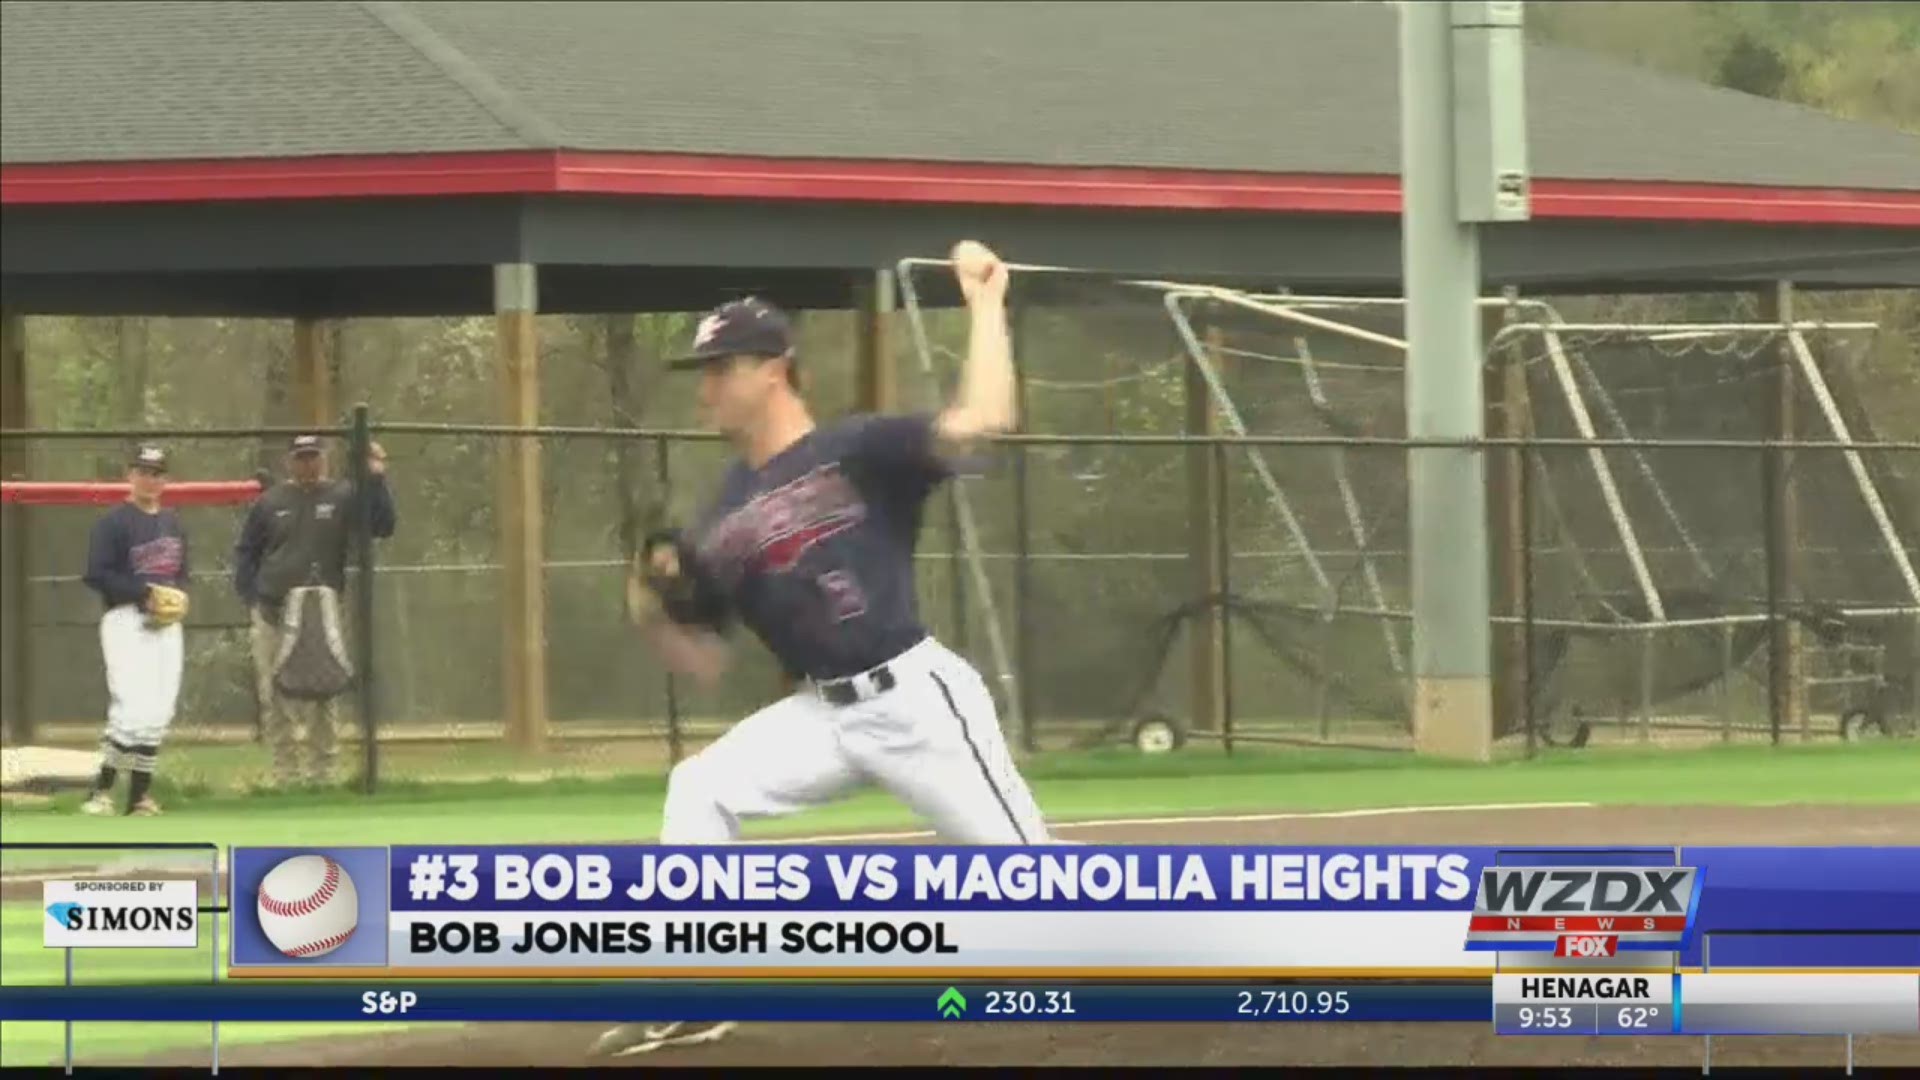 Bob Jones baseball took down Magnolia Heights 2-1.